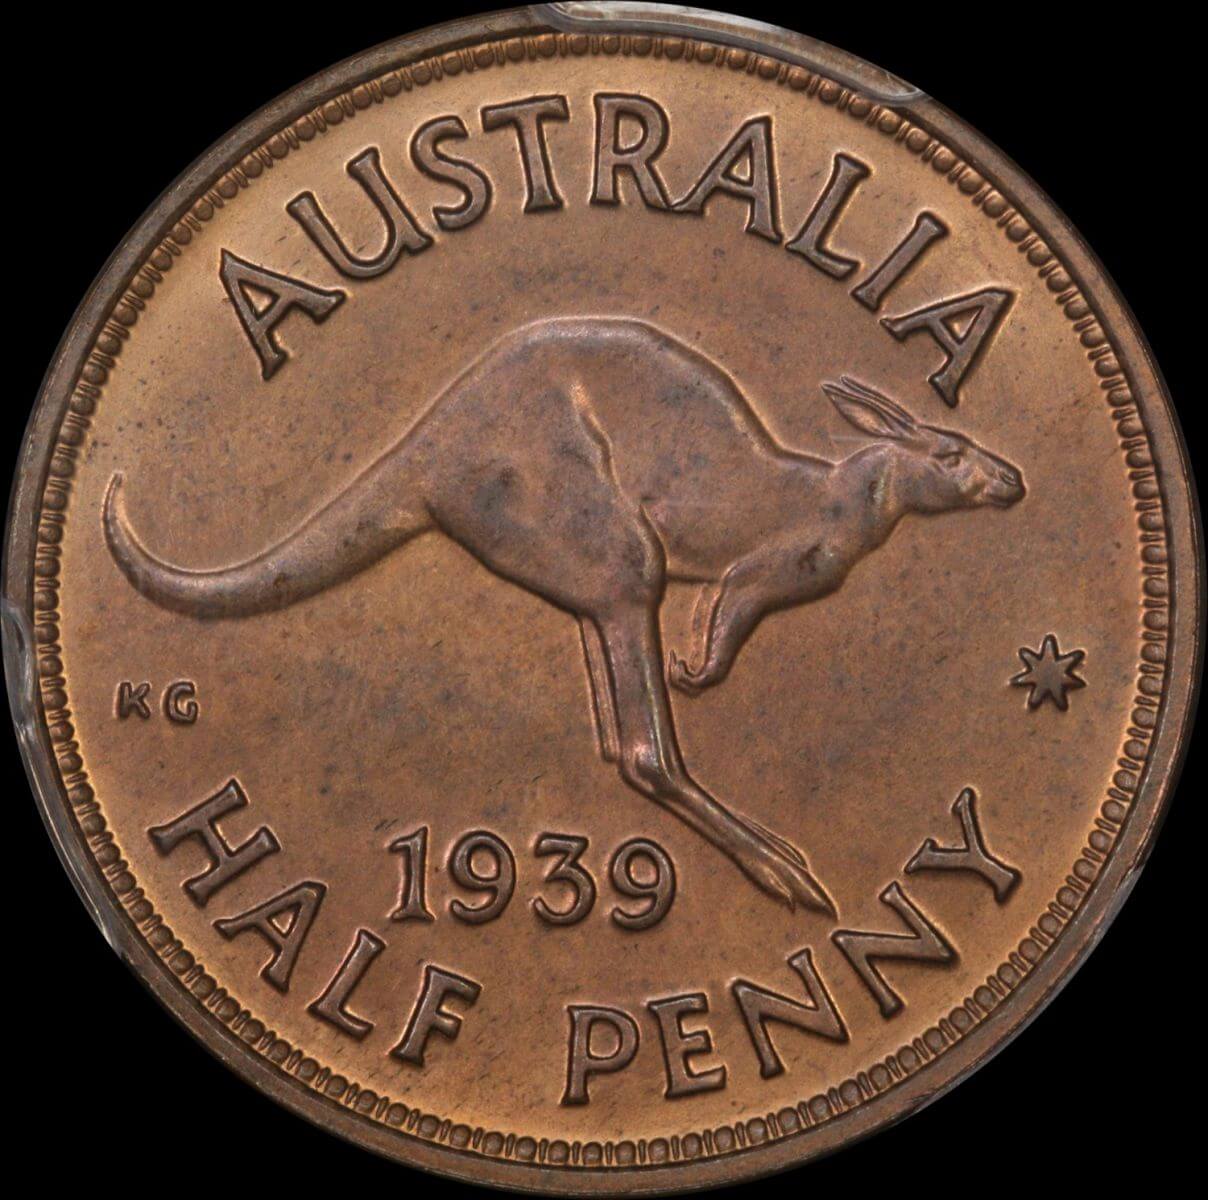 Australia Proof 1939 Halfpenny Kangaroo Reverse